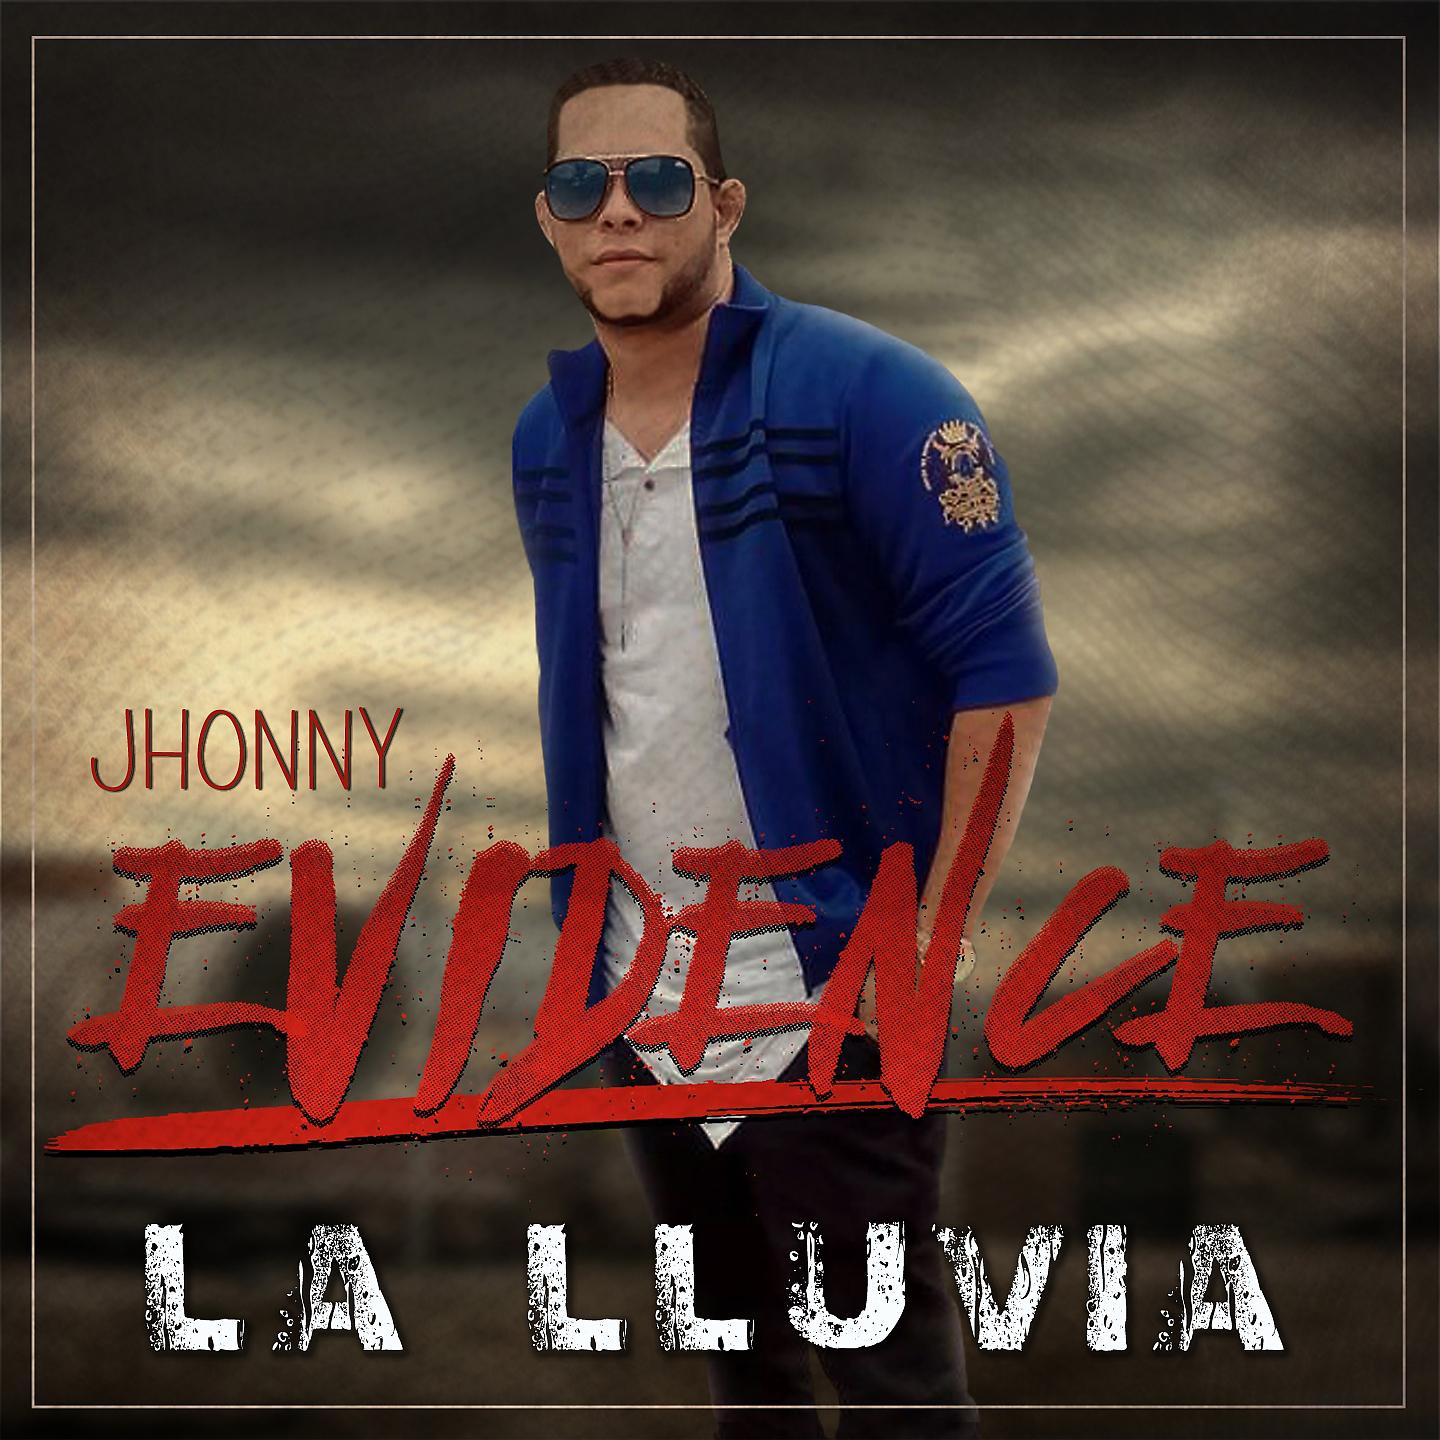 Постер альбома La Lluvia